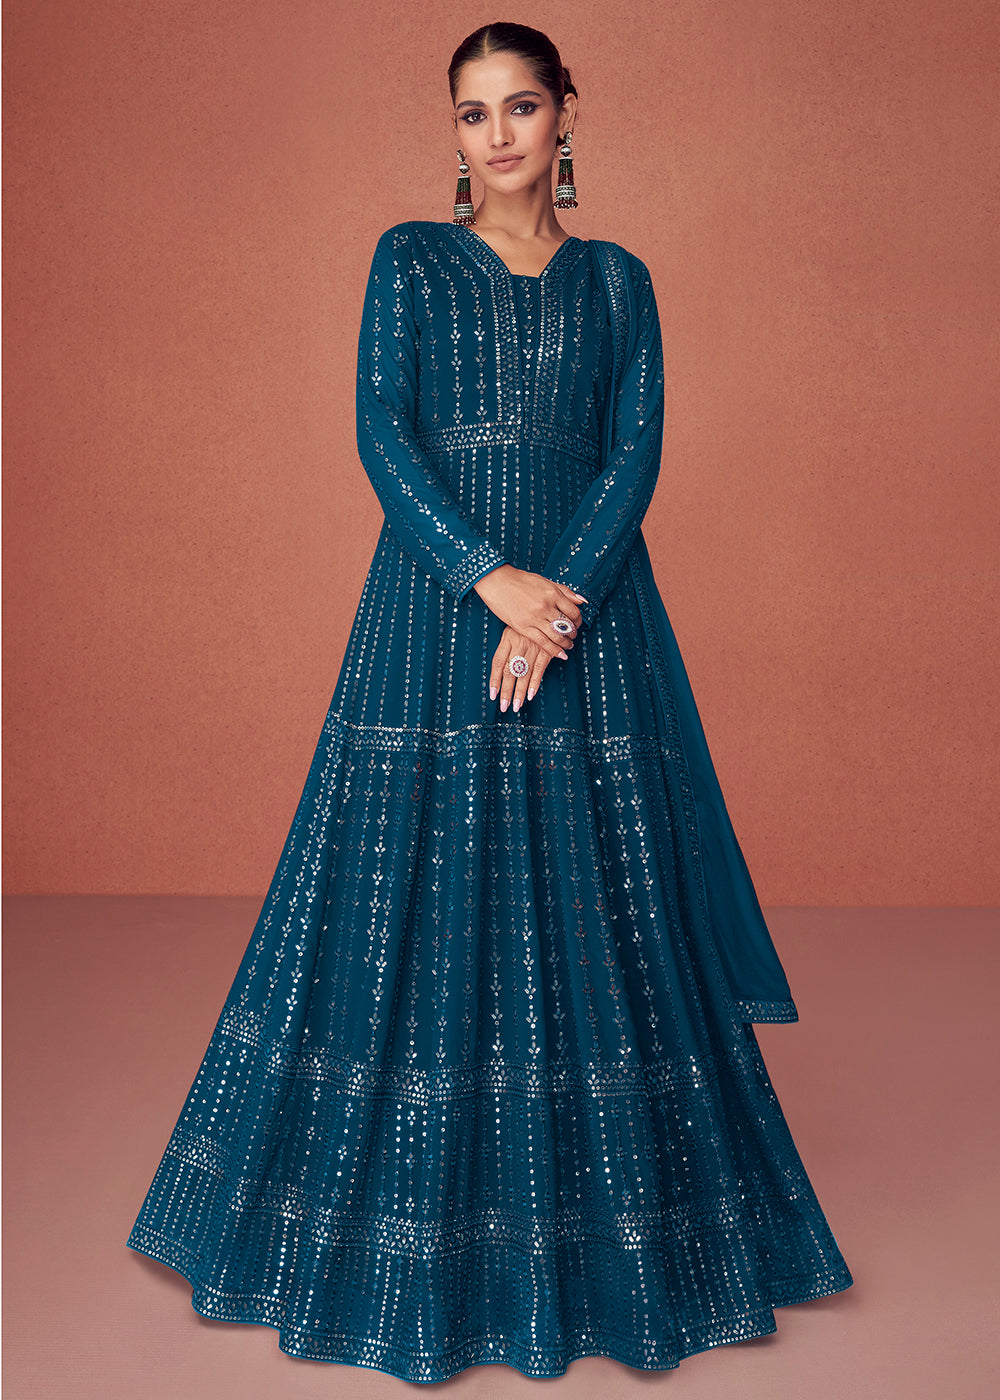 Buy Now Teal Blue Bridesmaid Wear Wedding Wear Anarkali Suit Online in USA, UK, Australia, New Zealand, Canada & Worldwide at Empress Clothing.